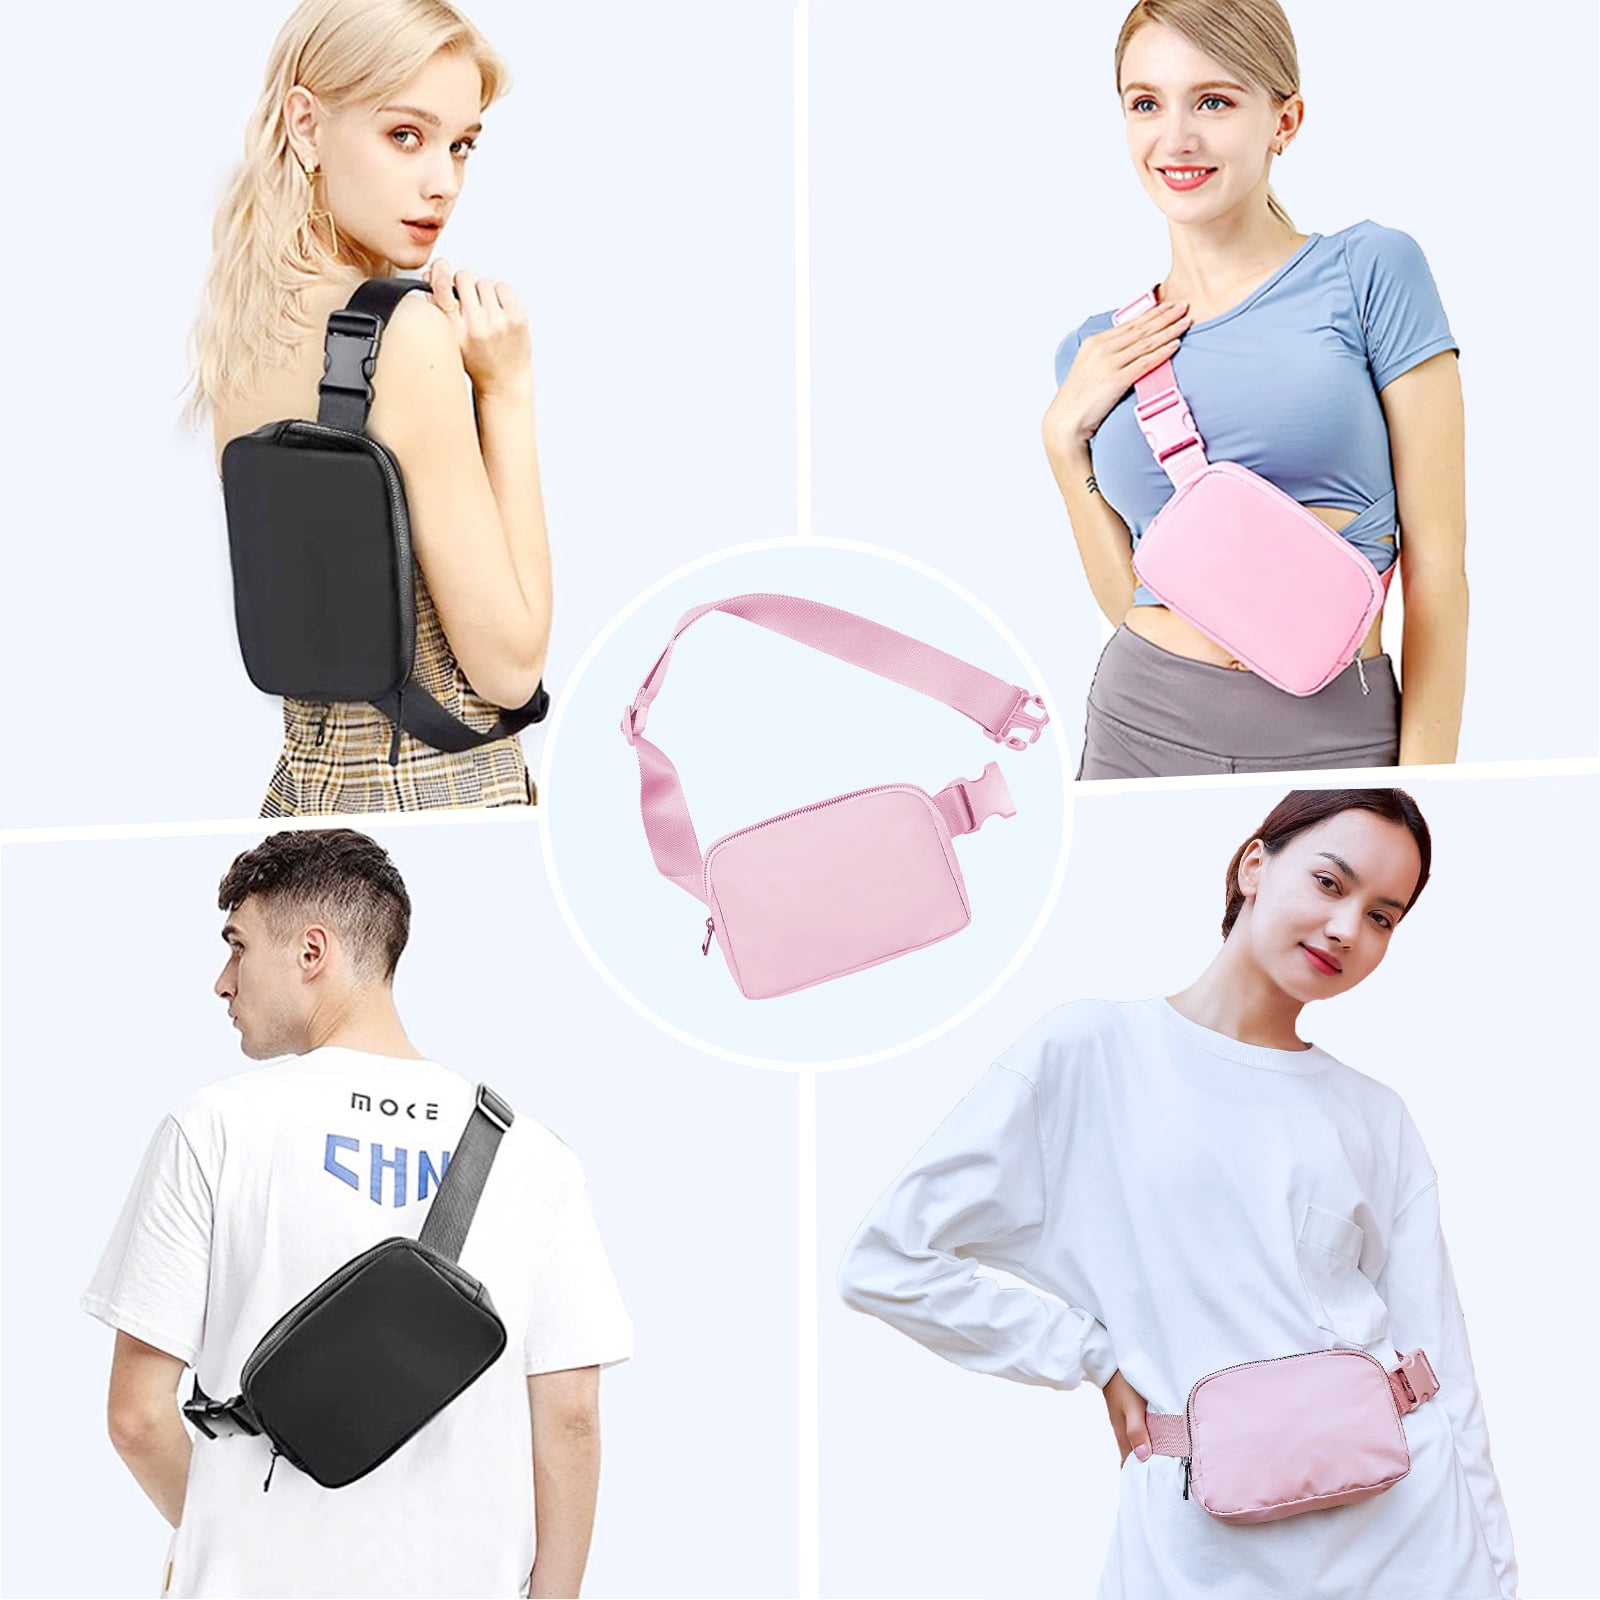 Poppy Faux Leather Fanny Pack Belt Bag Phone Pouch Waist Bag Chest Bag Shoulder Purse for Men Women, Adult Unisex, Size: Small, Pink